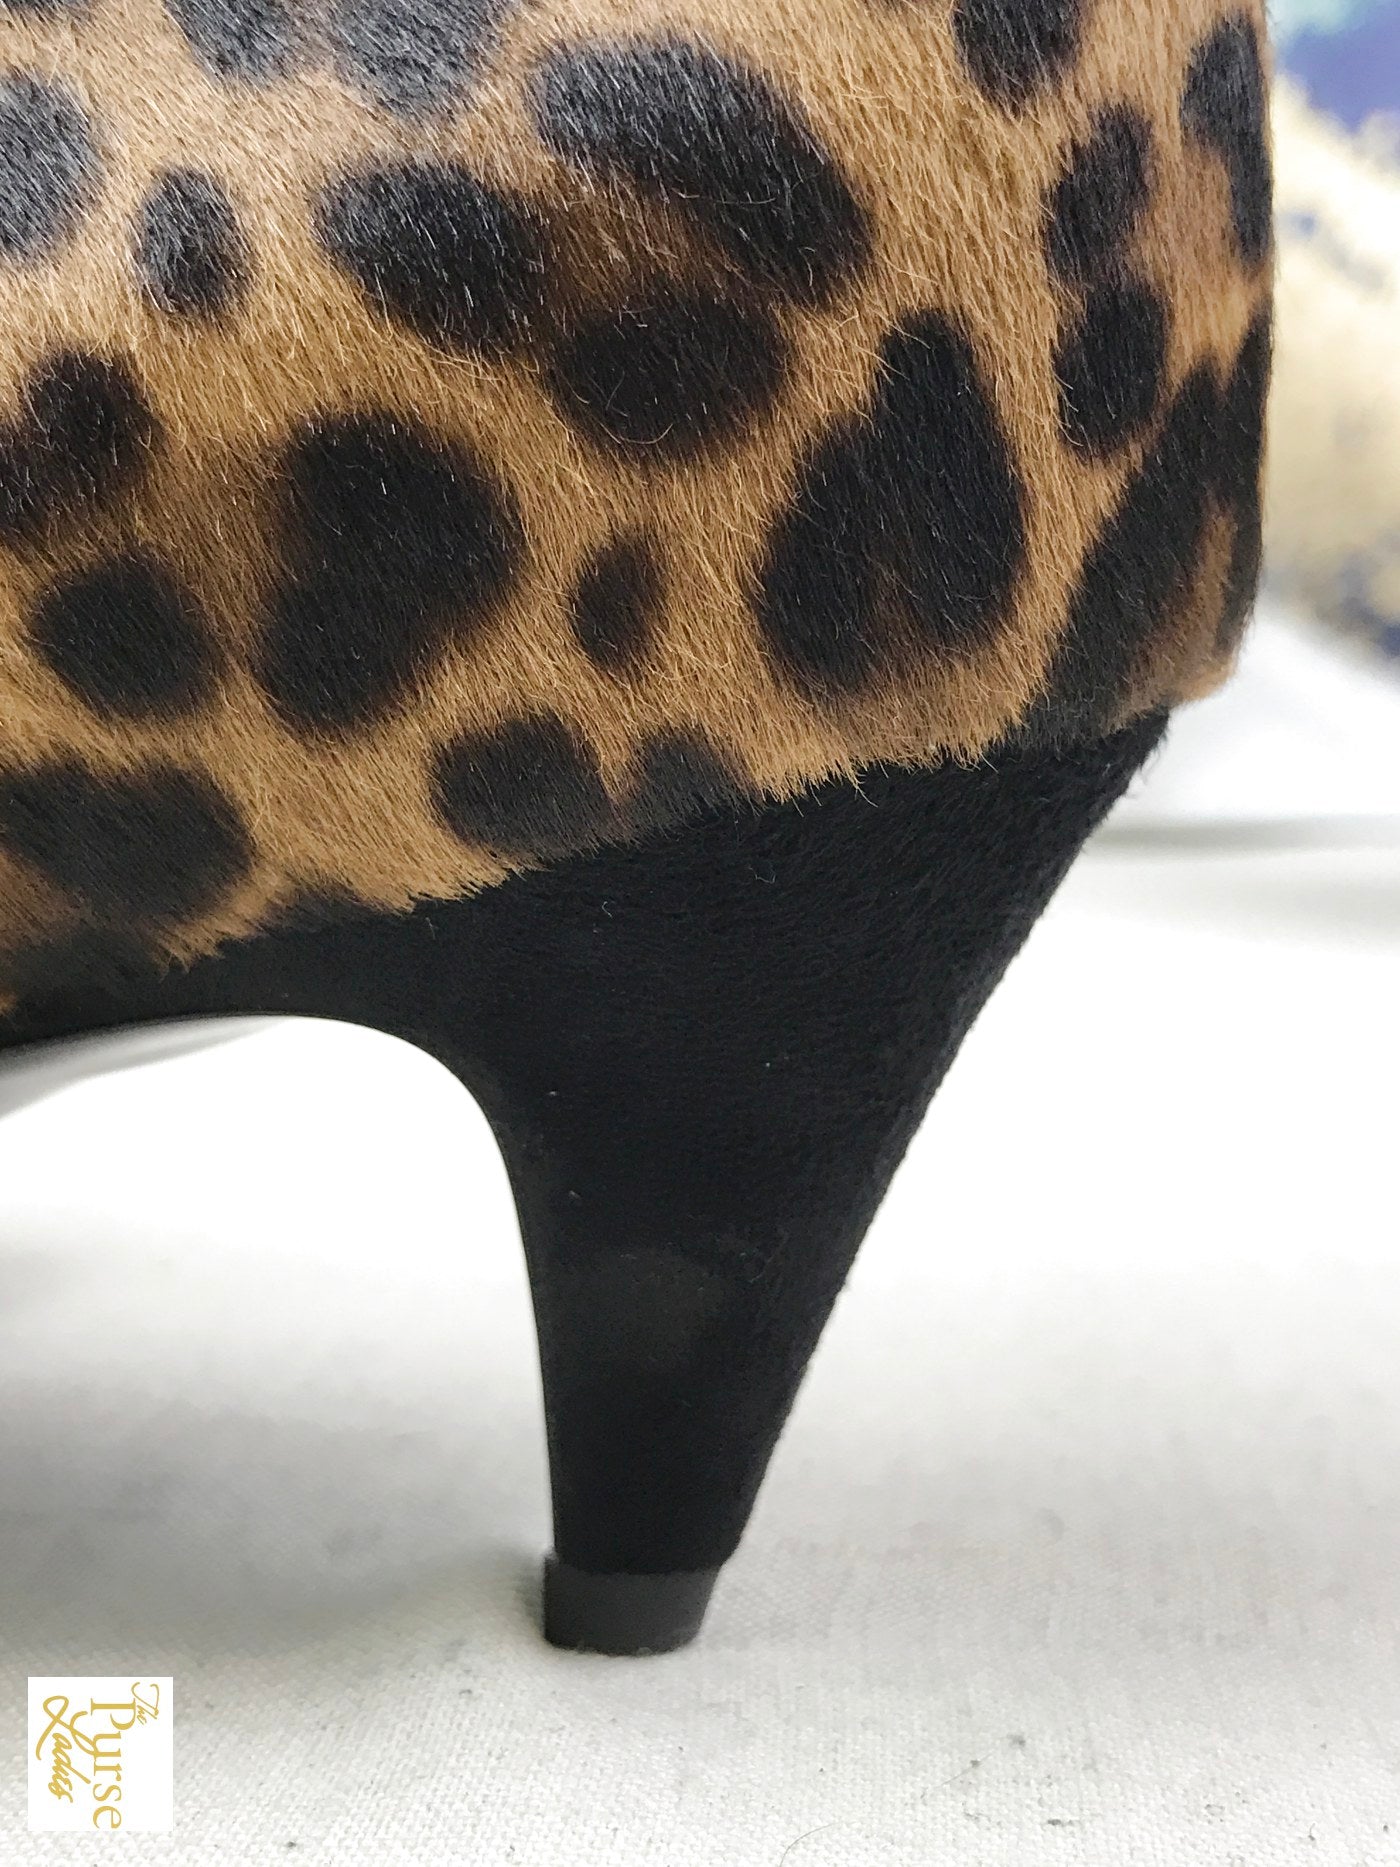 previously owned high end designer cheetah print calf hair large